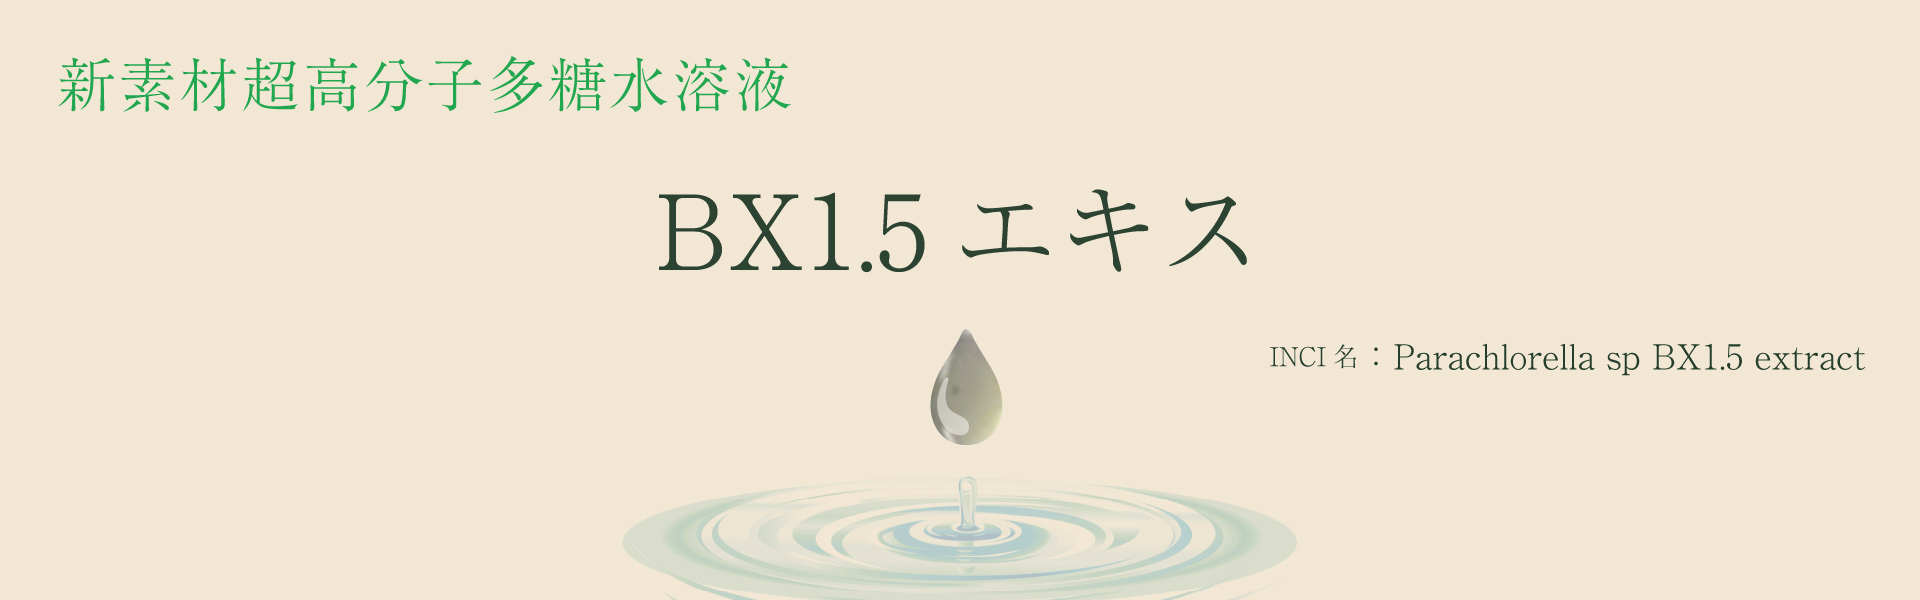 BX1.5エキス